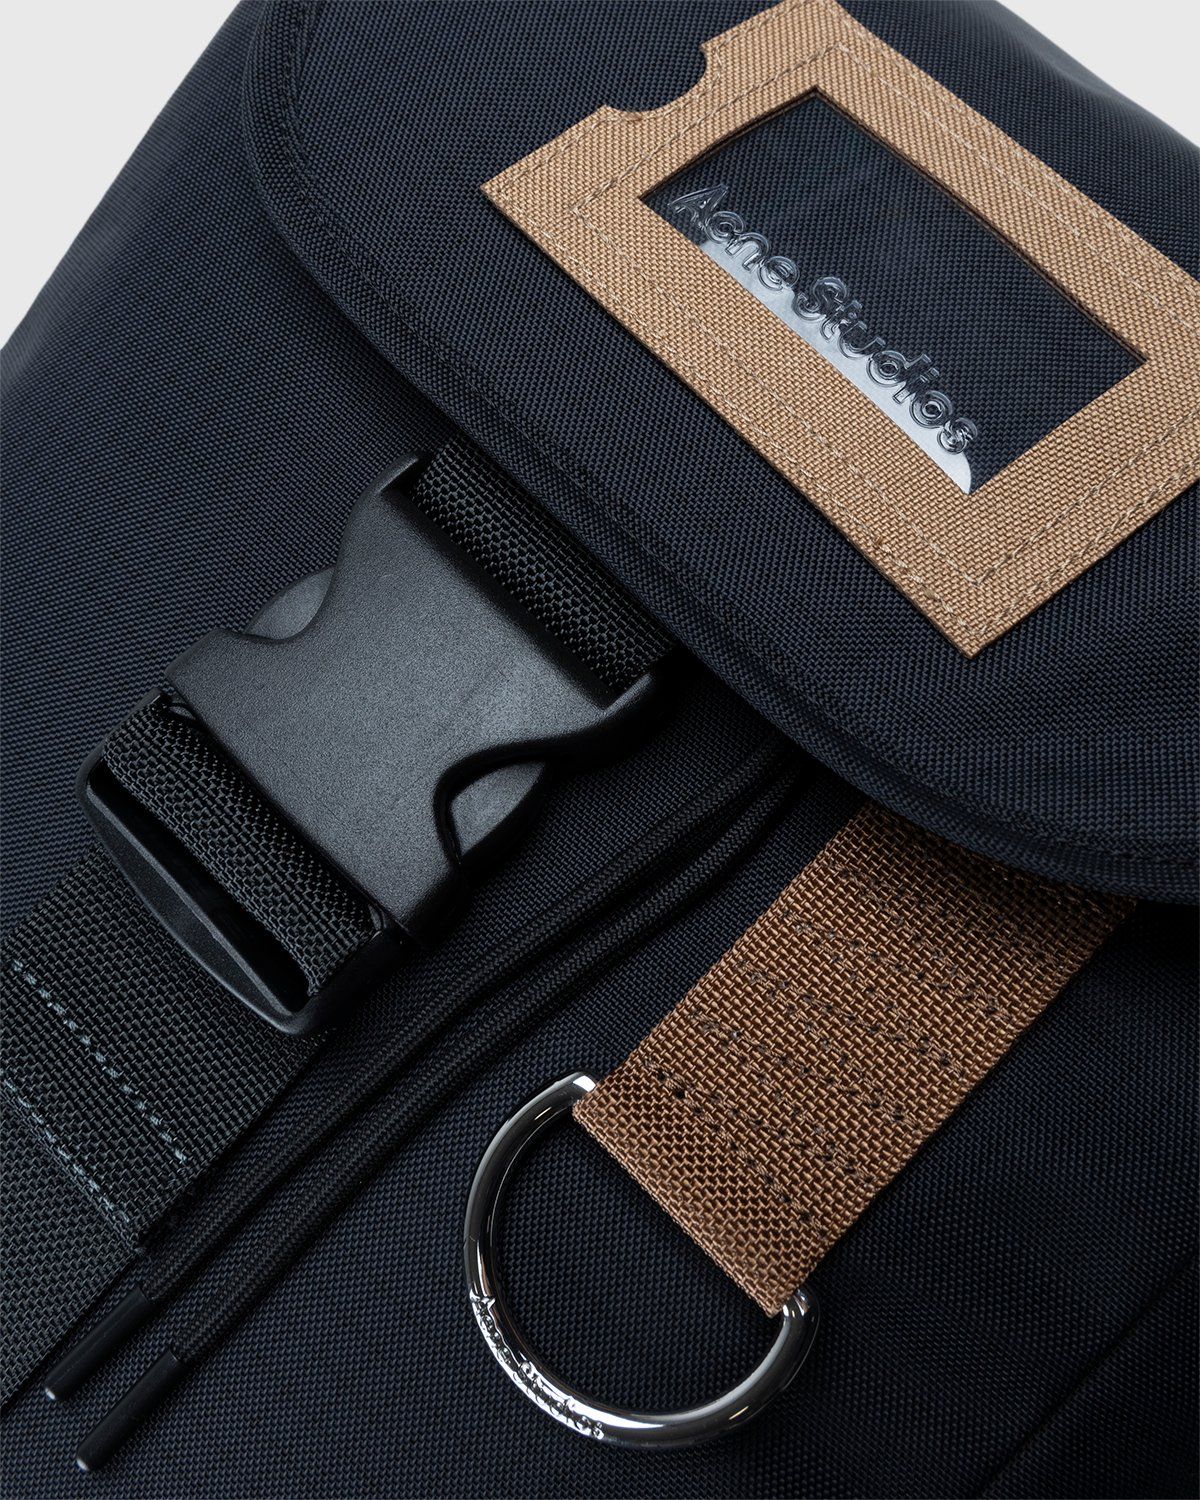 Acne Studios – Large Ripstop Backpack Black/Khaki Green - Bags - Black - Image 5